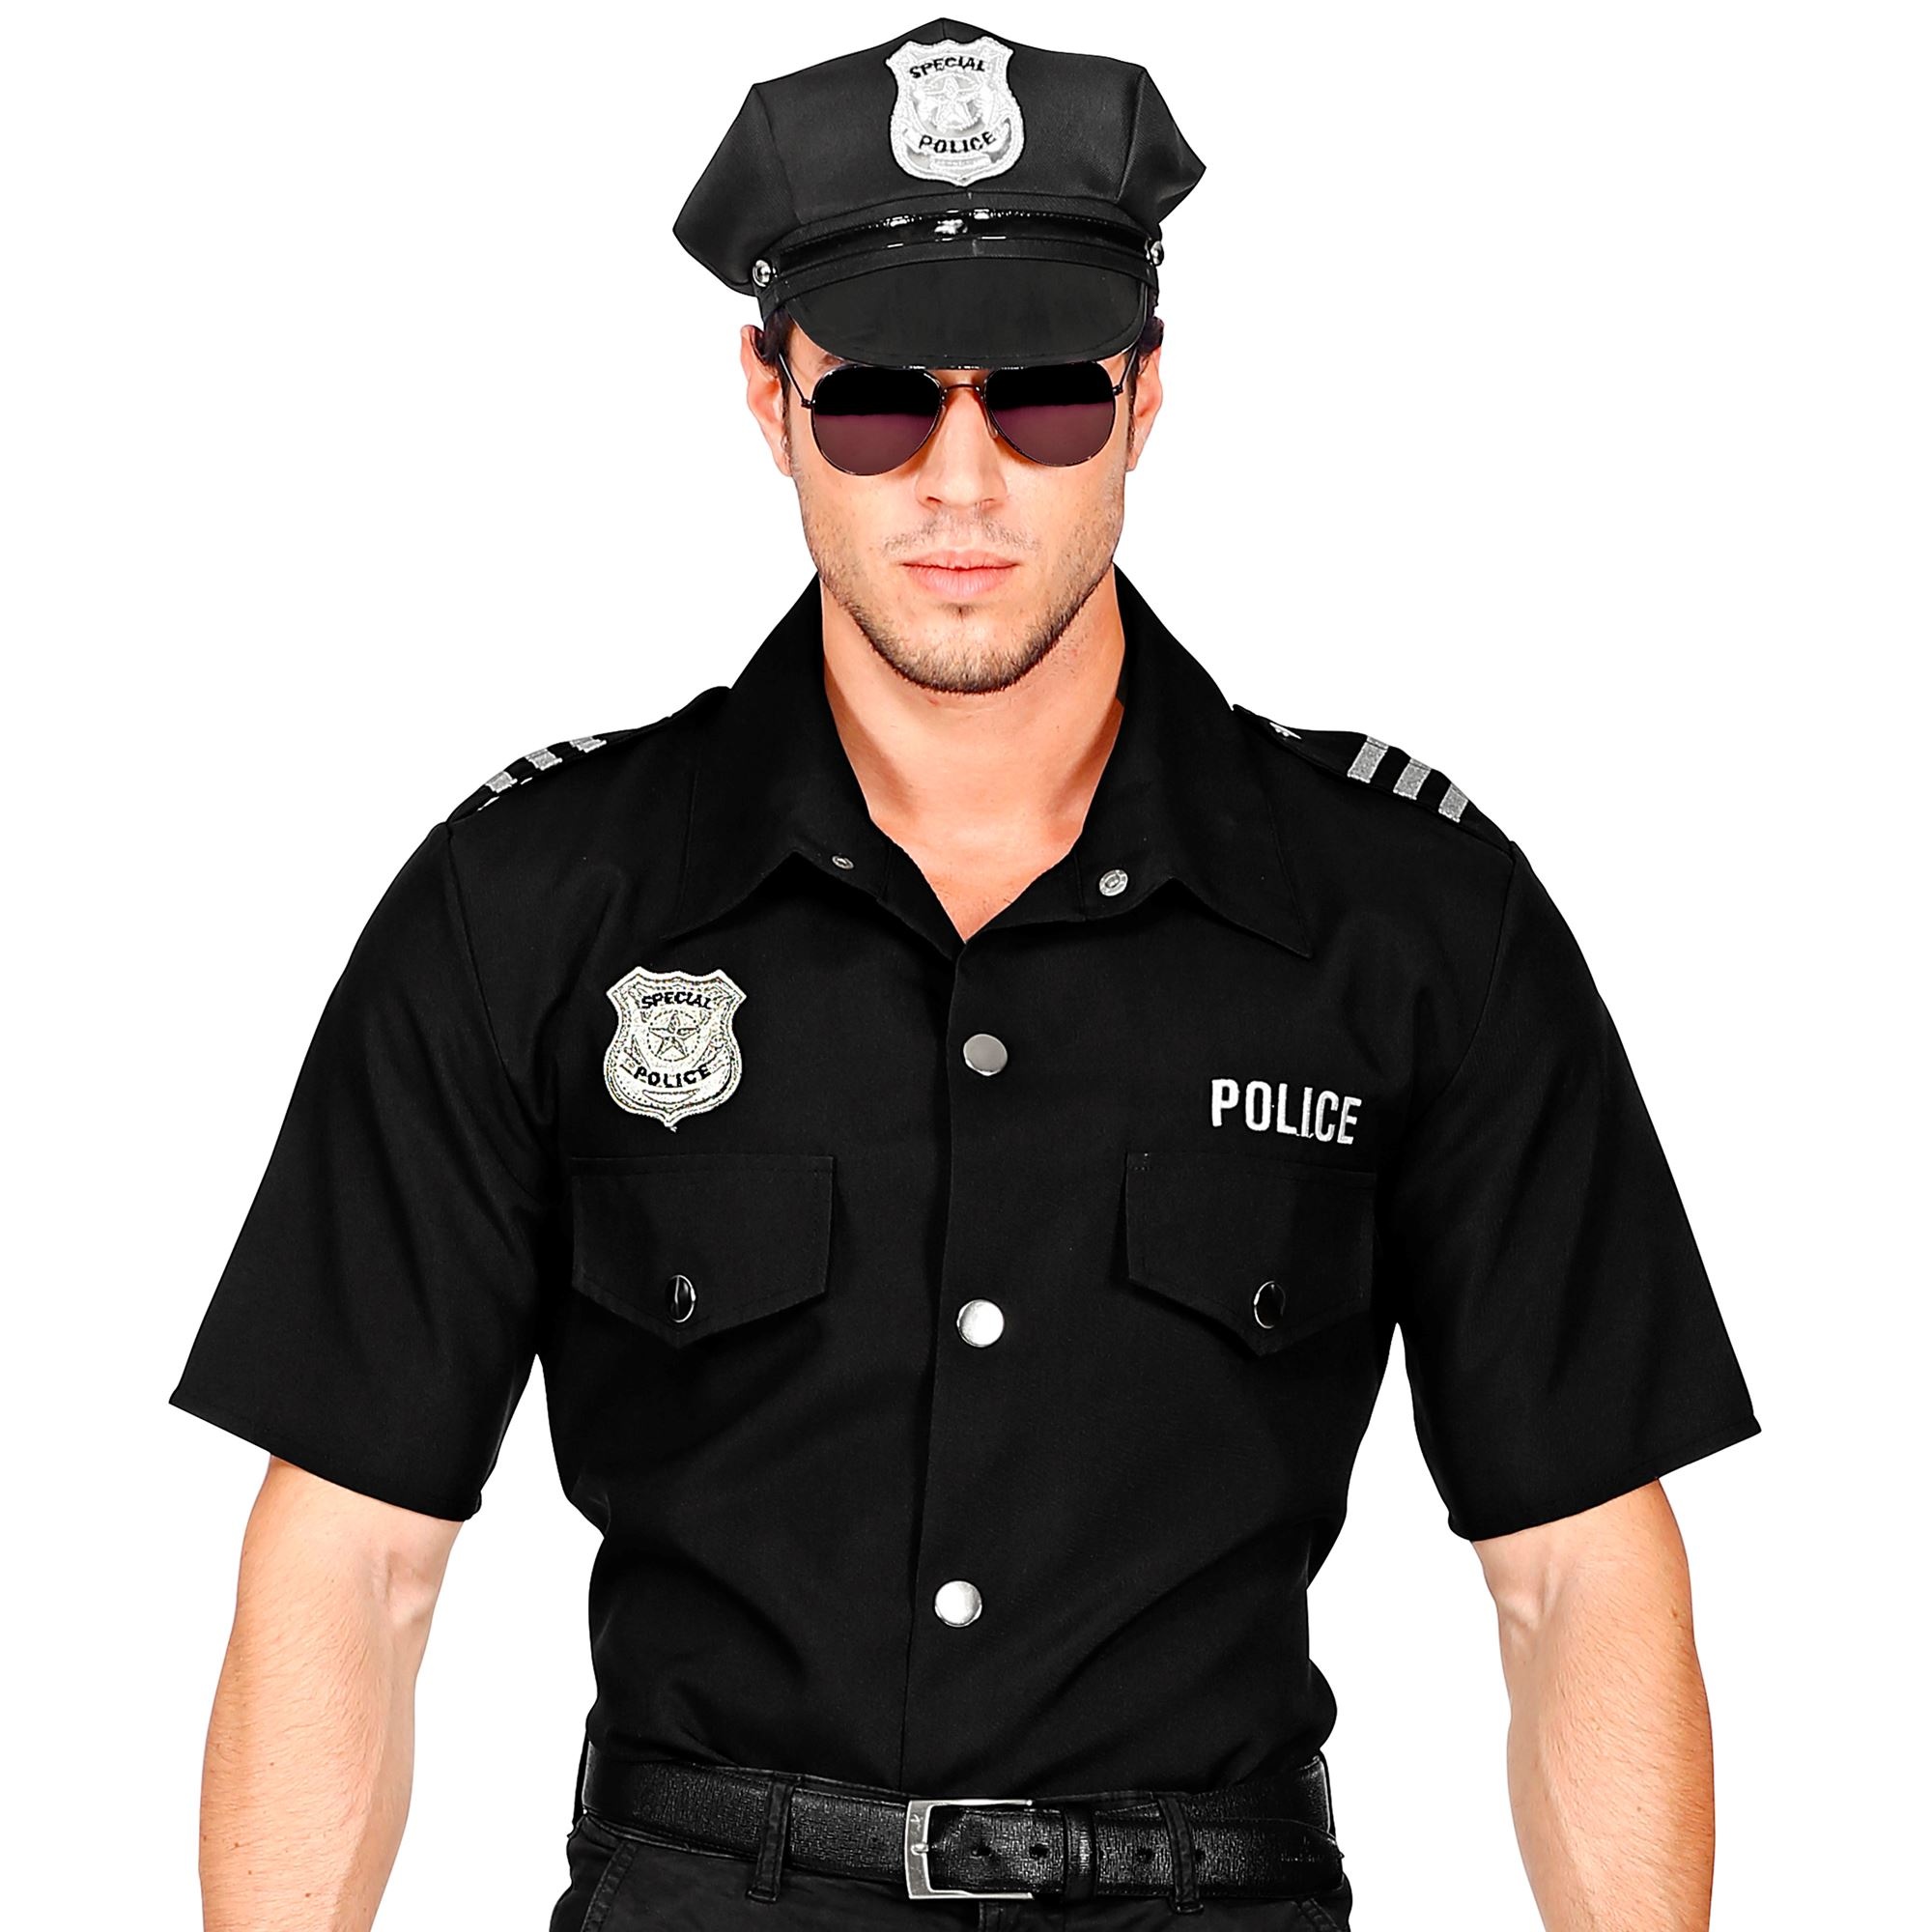 Widmann - Politie & Detective Kostuum - Uniform Shirt Politie Agent Man - zwart - Large / XL - Carnavalskleding - Verkleedkleding